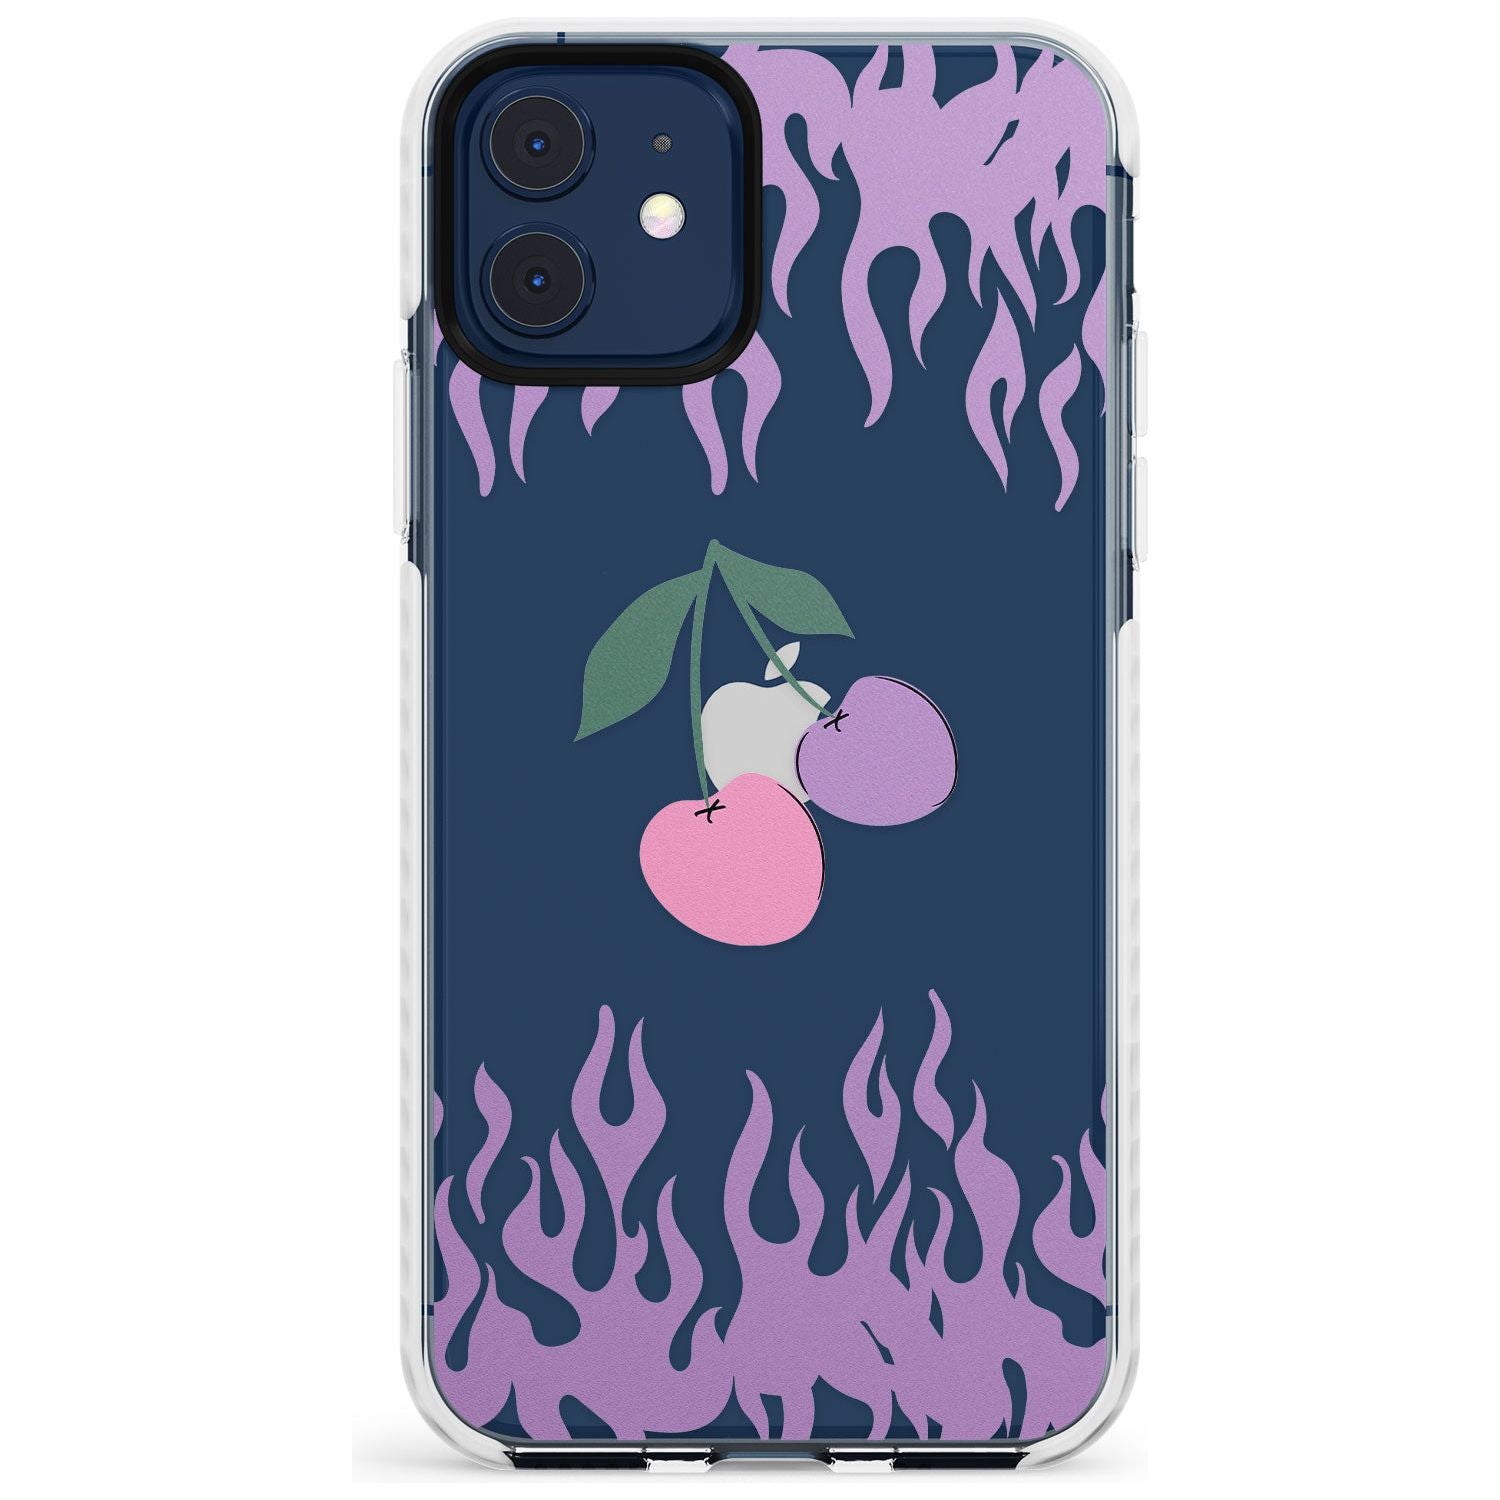 Cherries n' Flames Impact Phone Case for iPhone 11